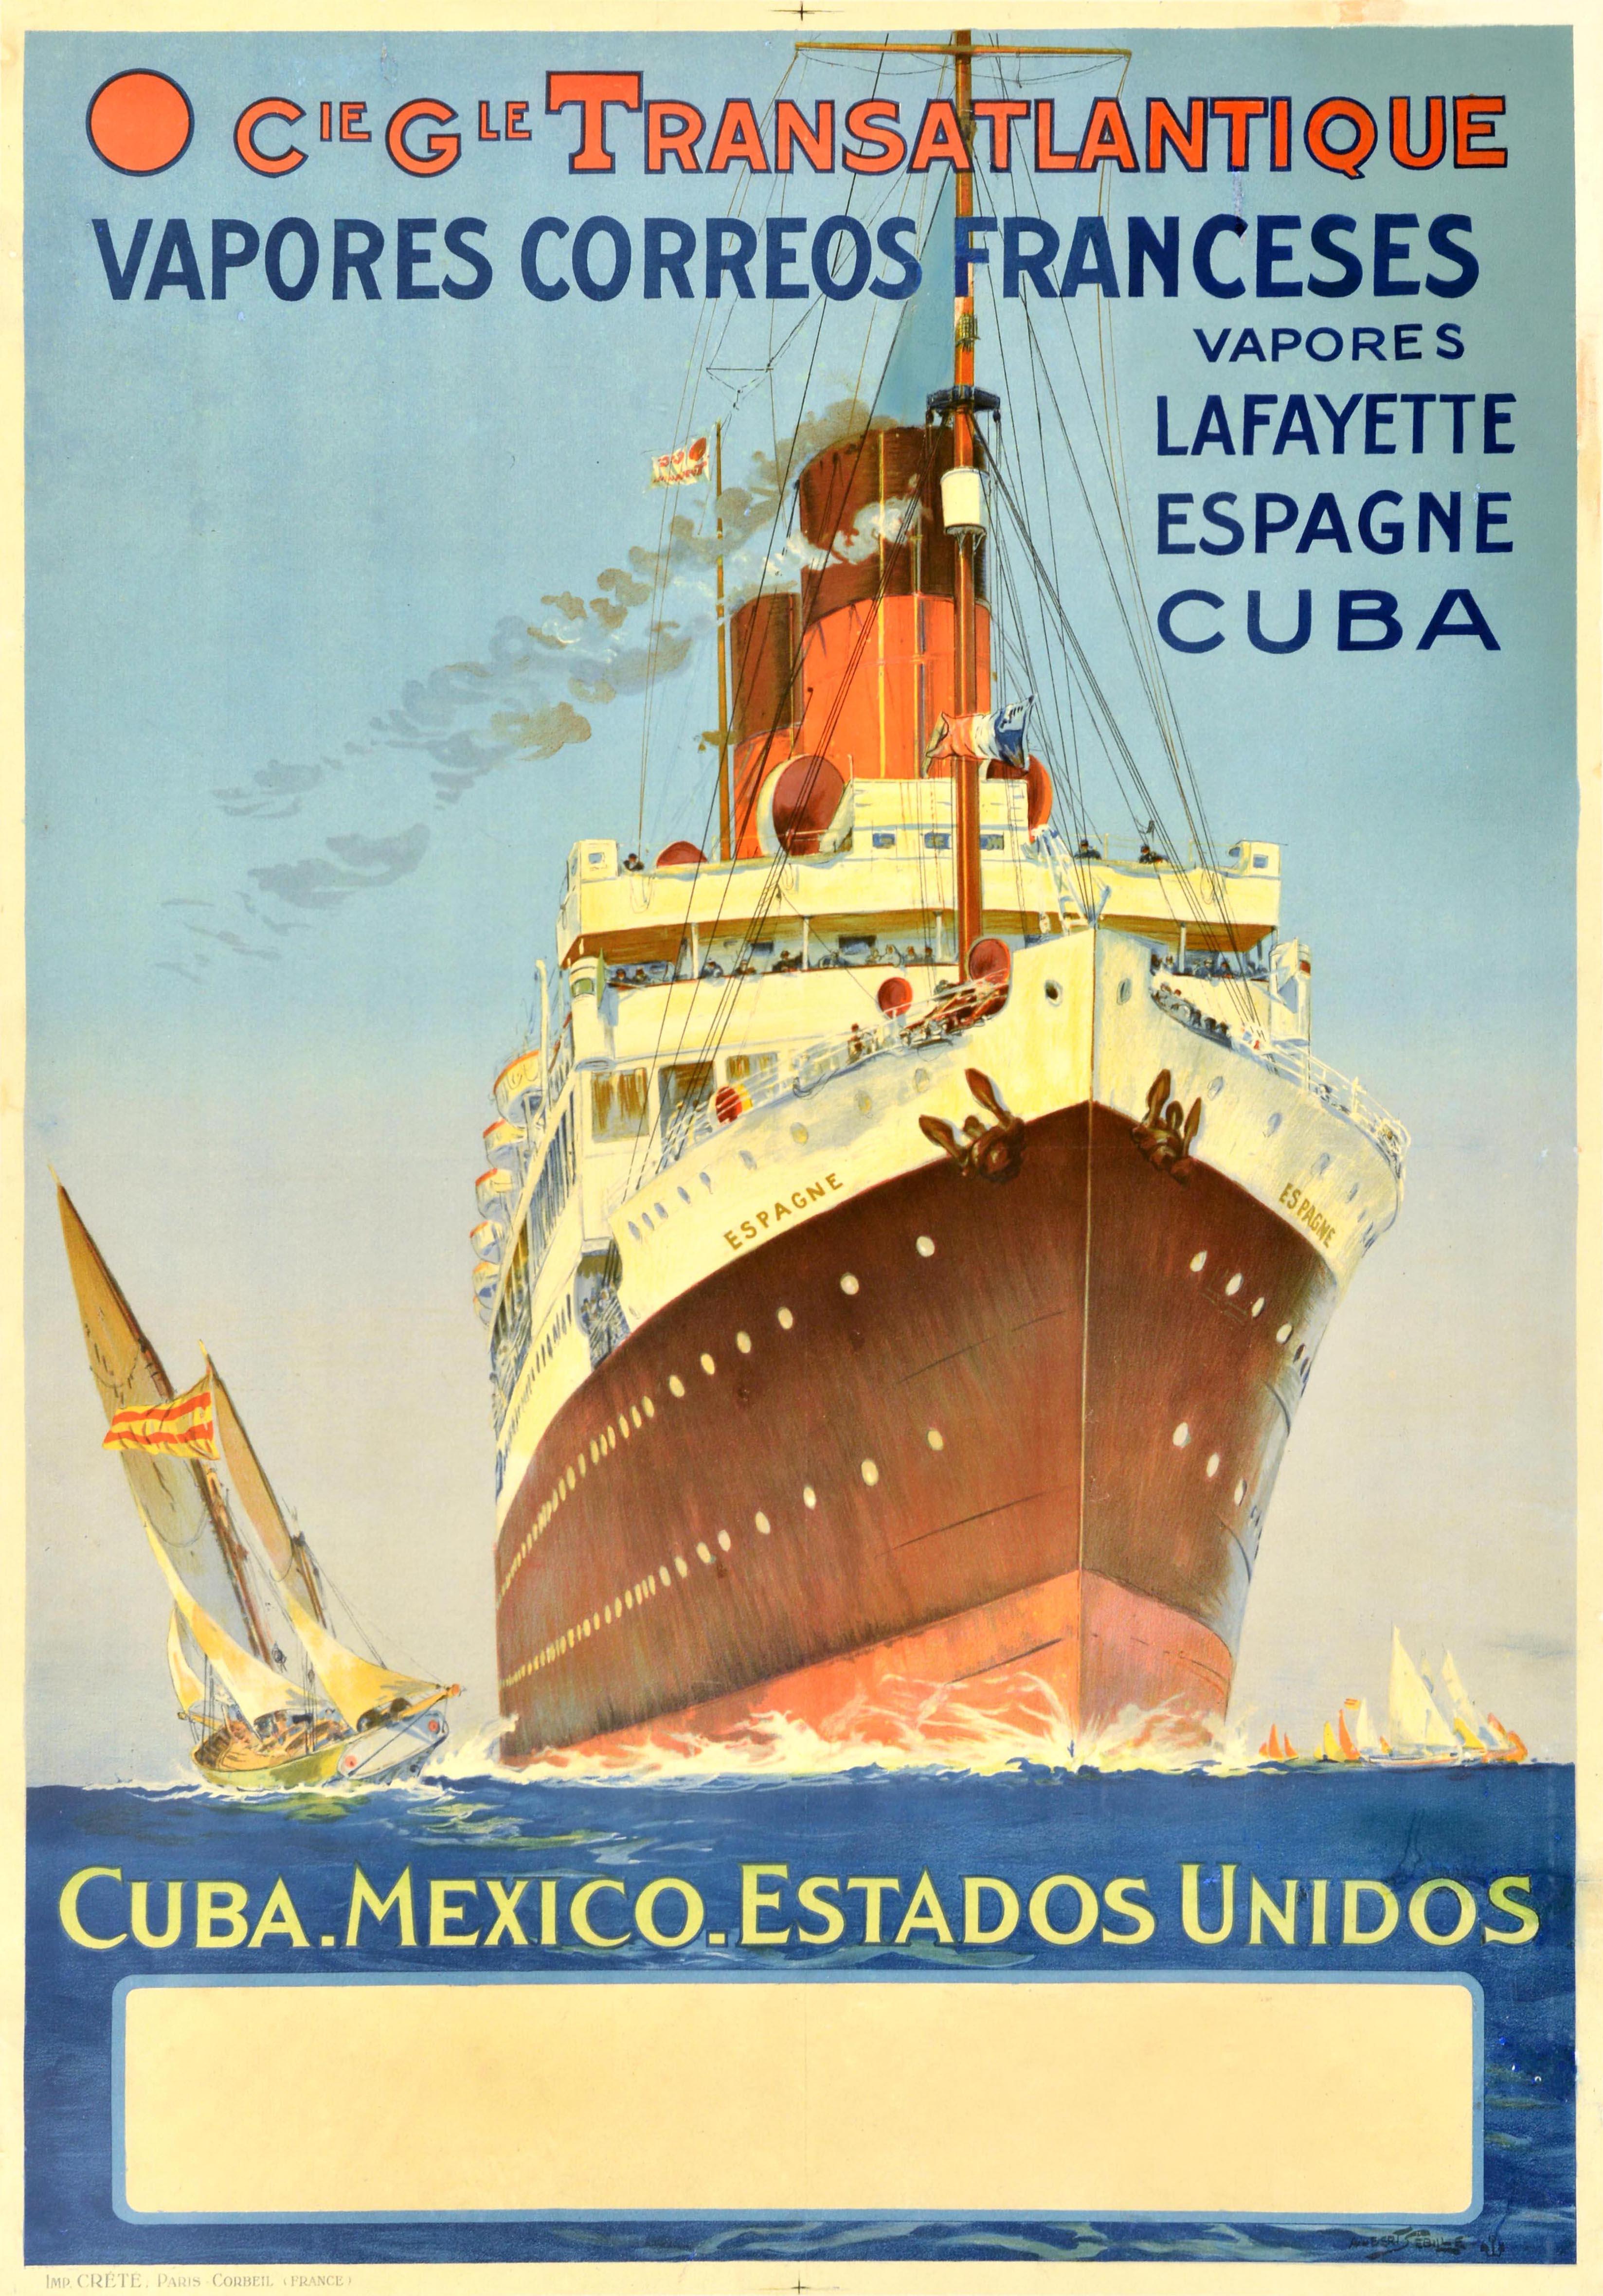 Albert Sebille Print - Original Vintage Steam Ship Cruise Travel Poster Cie Gle Transatlantique Espagne